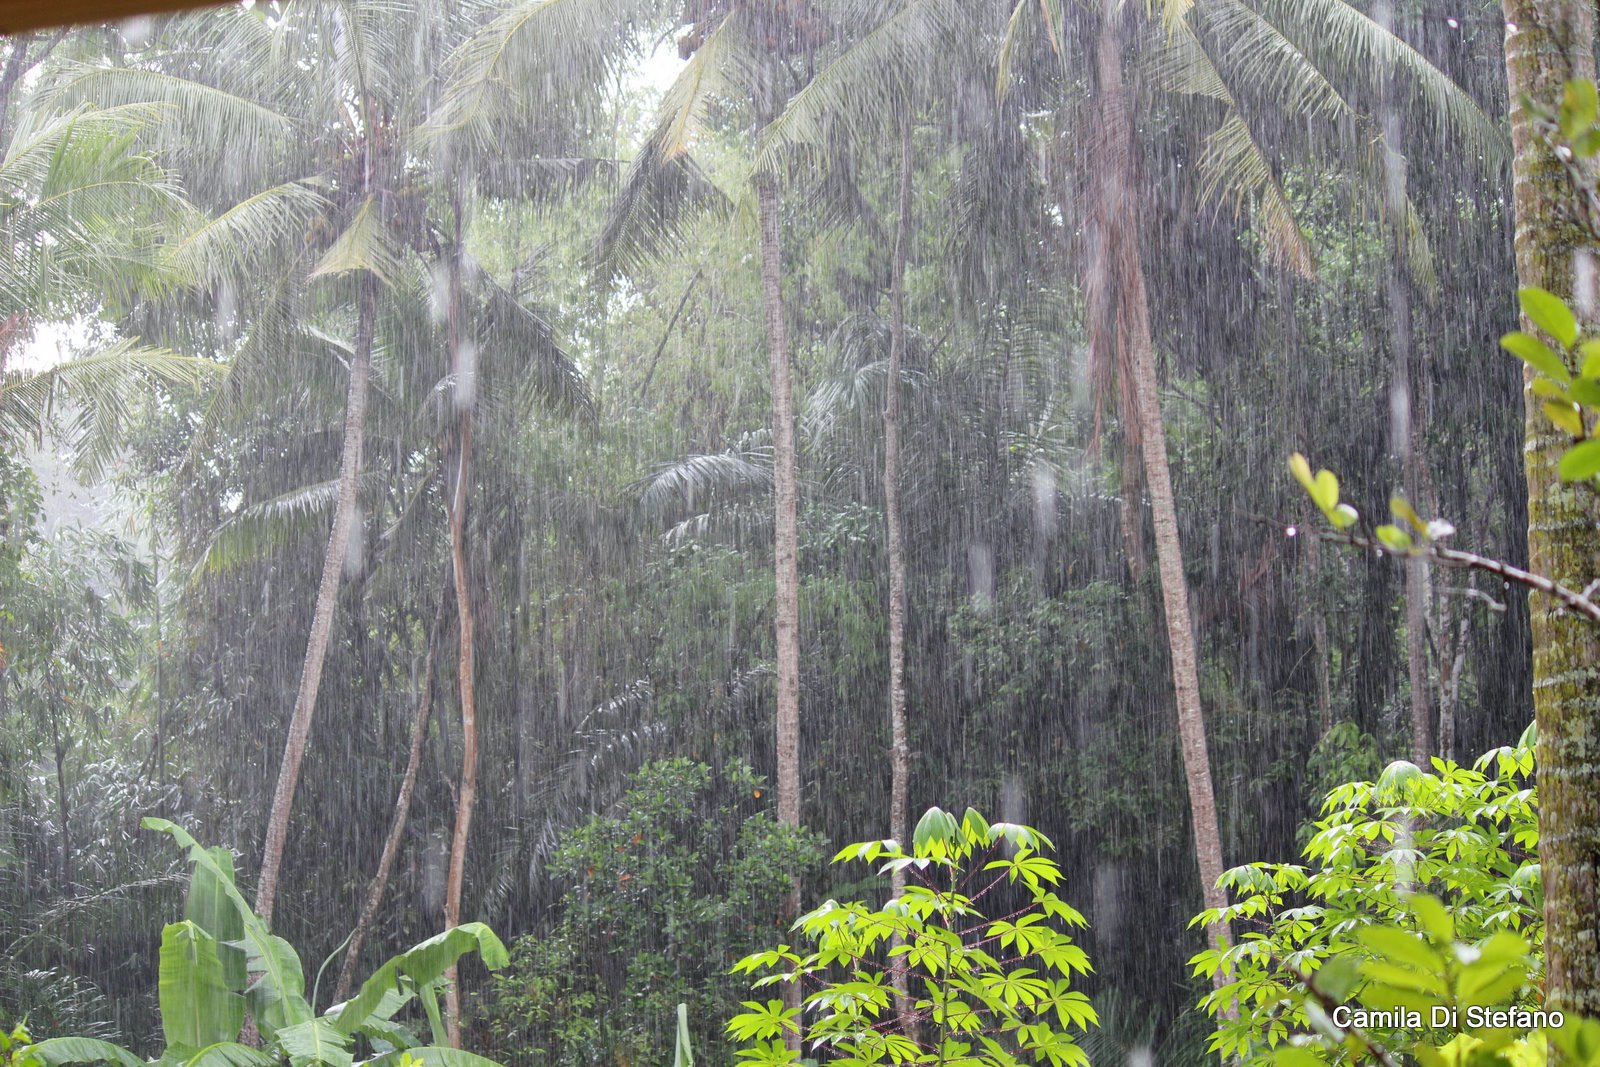 rainy season in bali